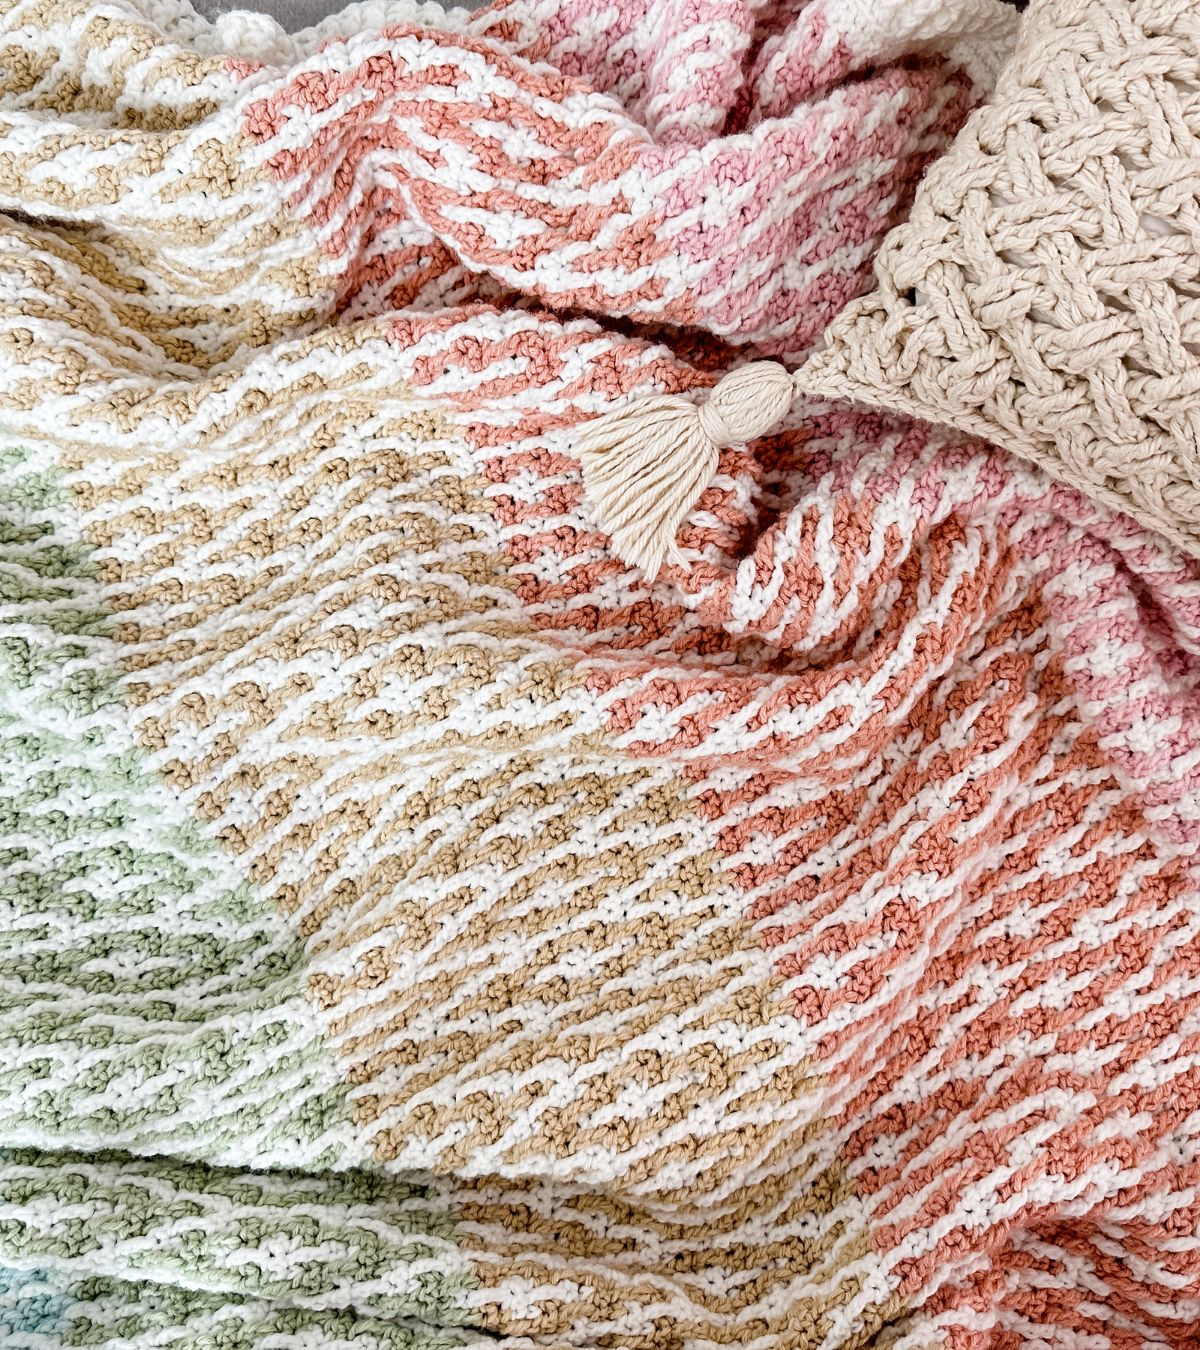 Rainbow Hugs Mosaic Crochet Blanket - MJ's off the Hook Designs